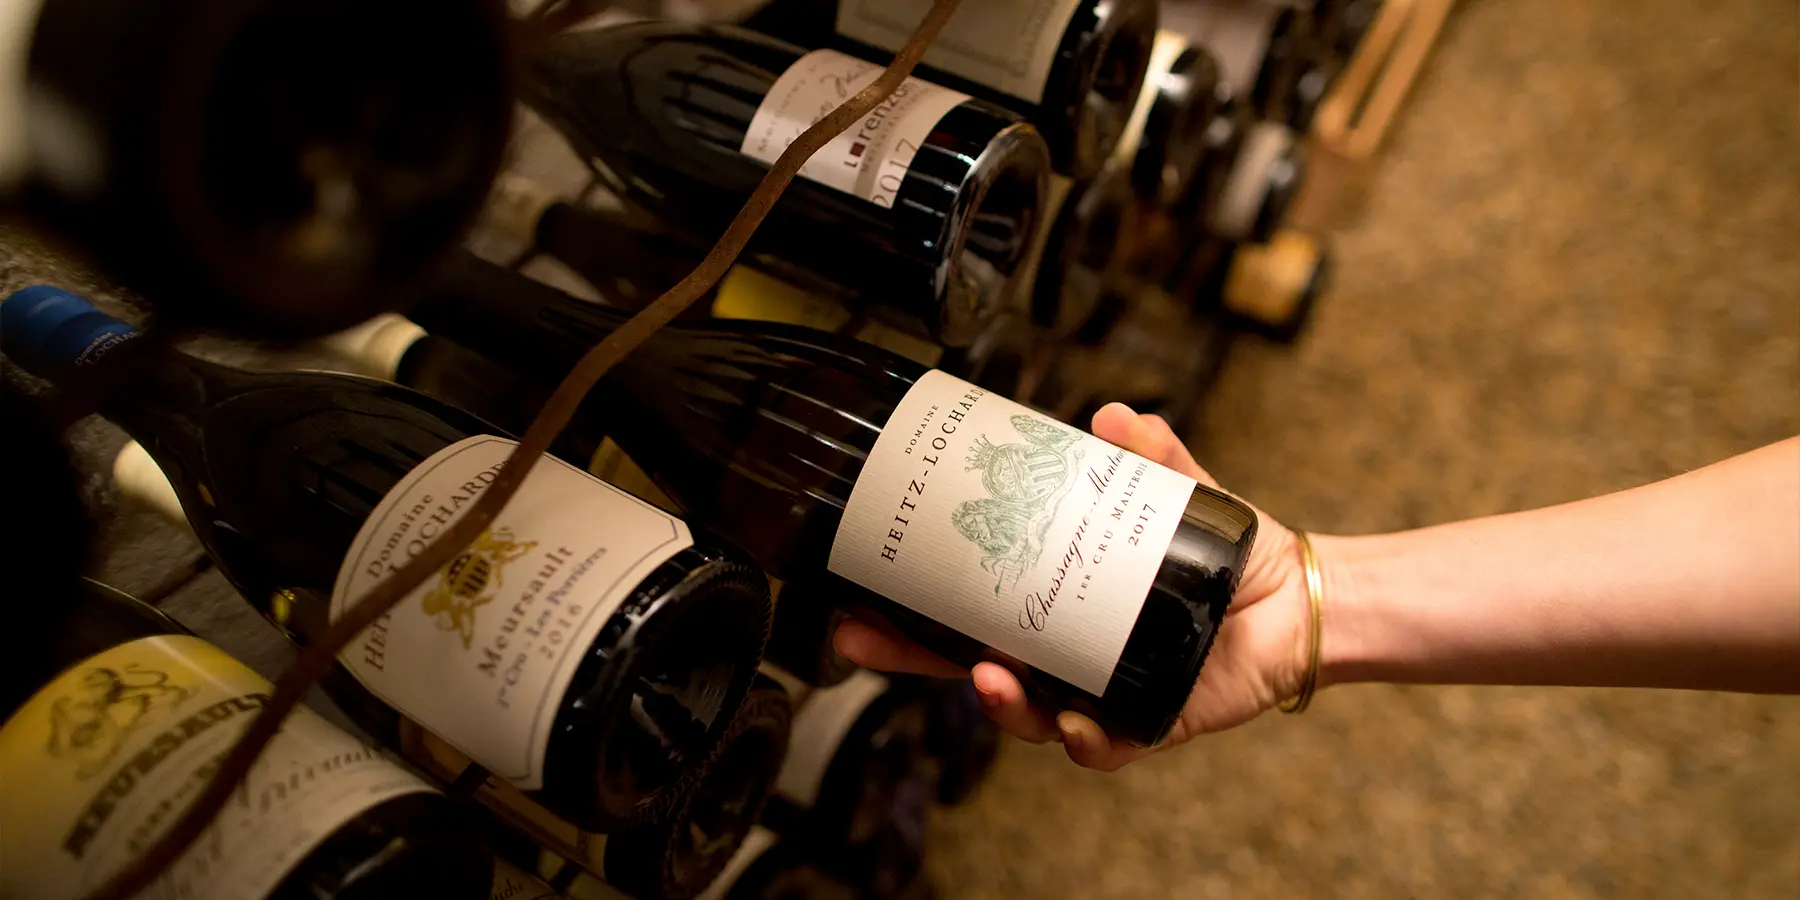 Ageing wines in the U'wine cellar